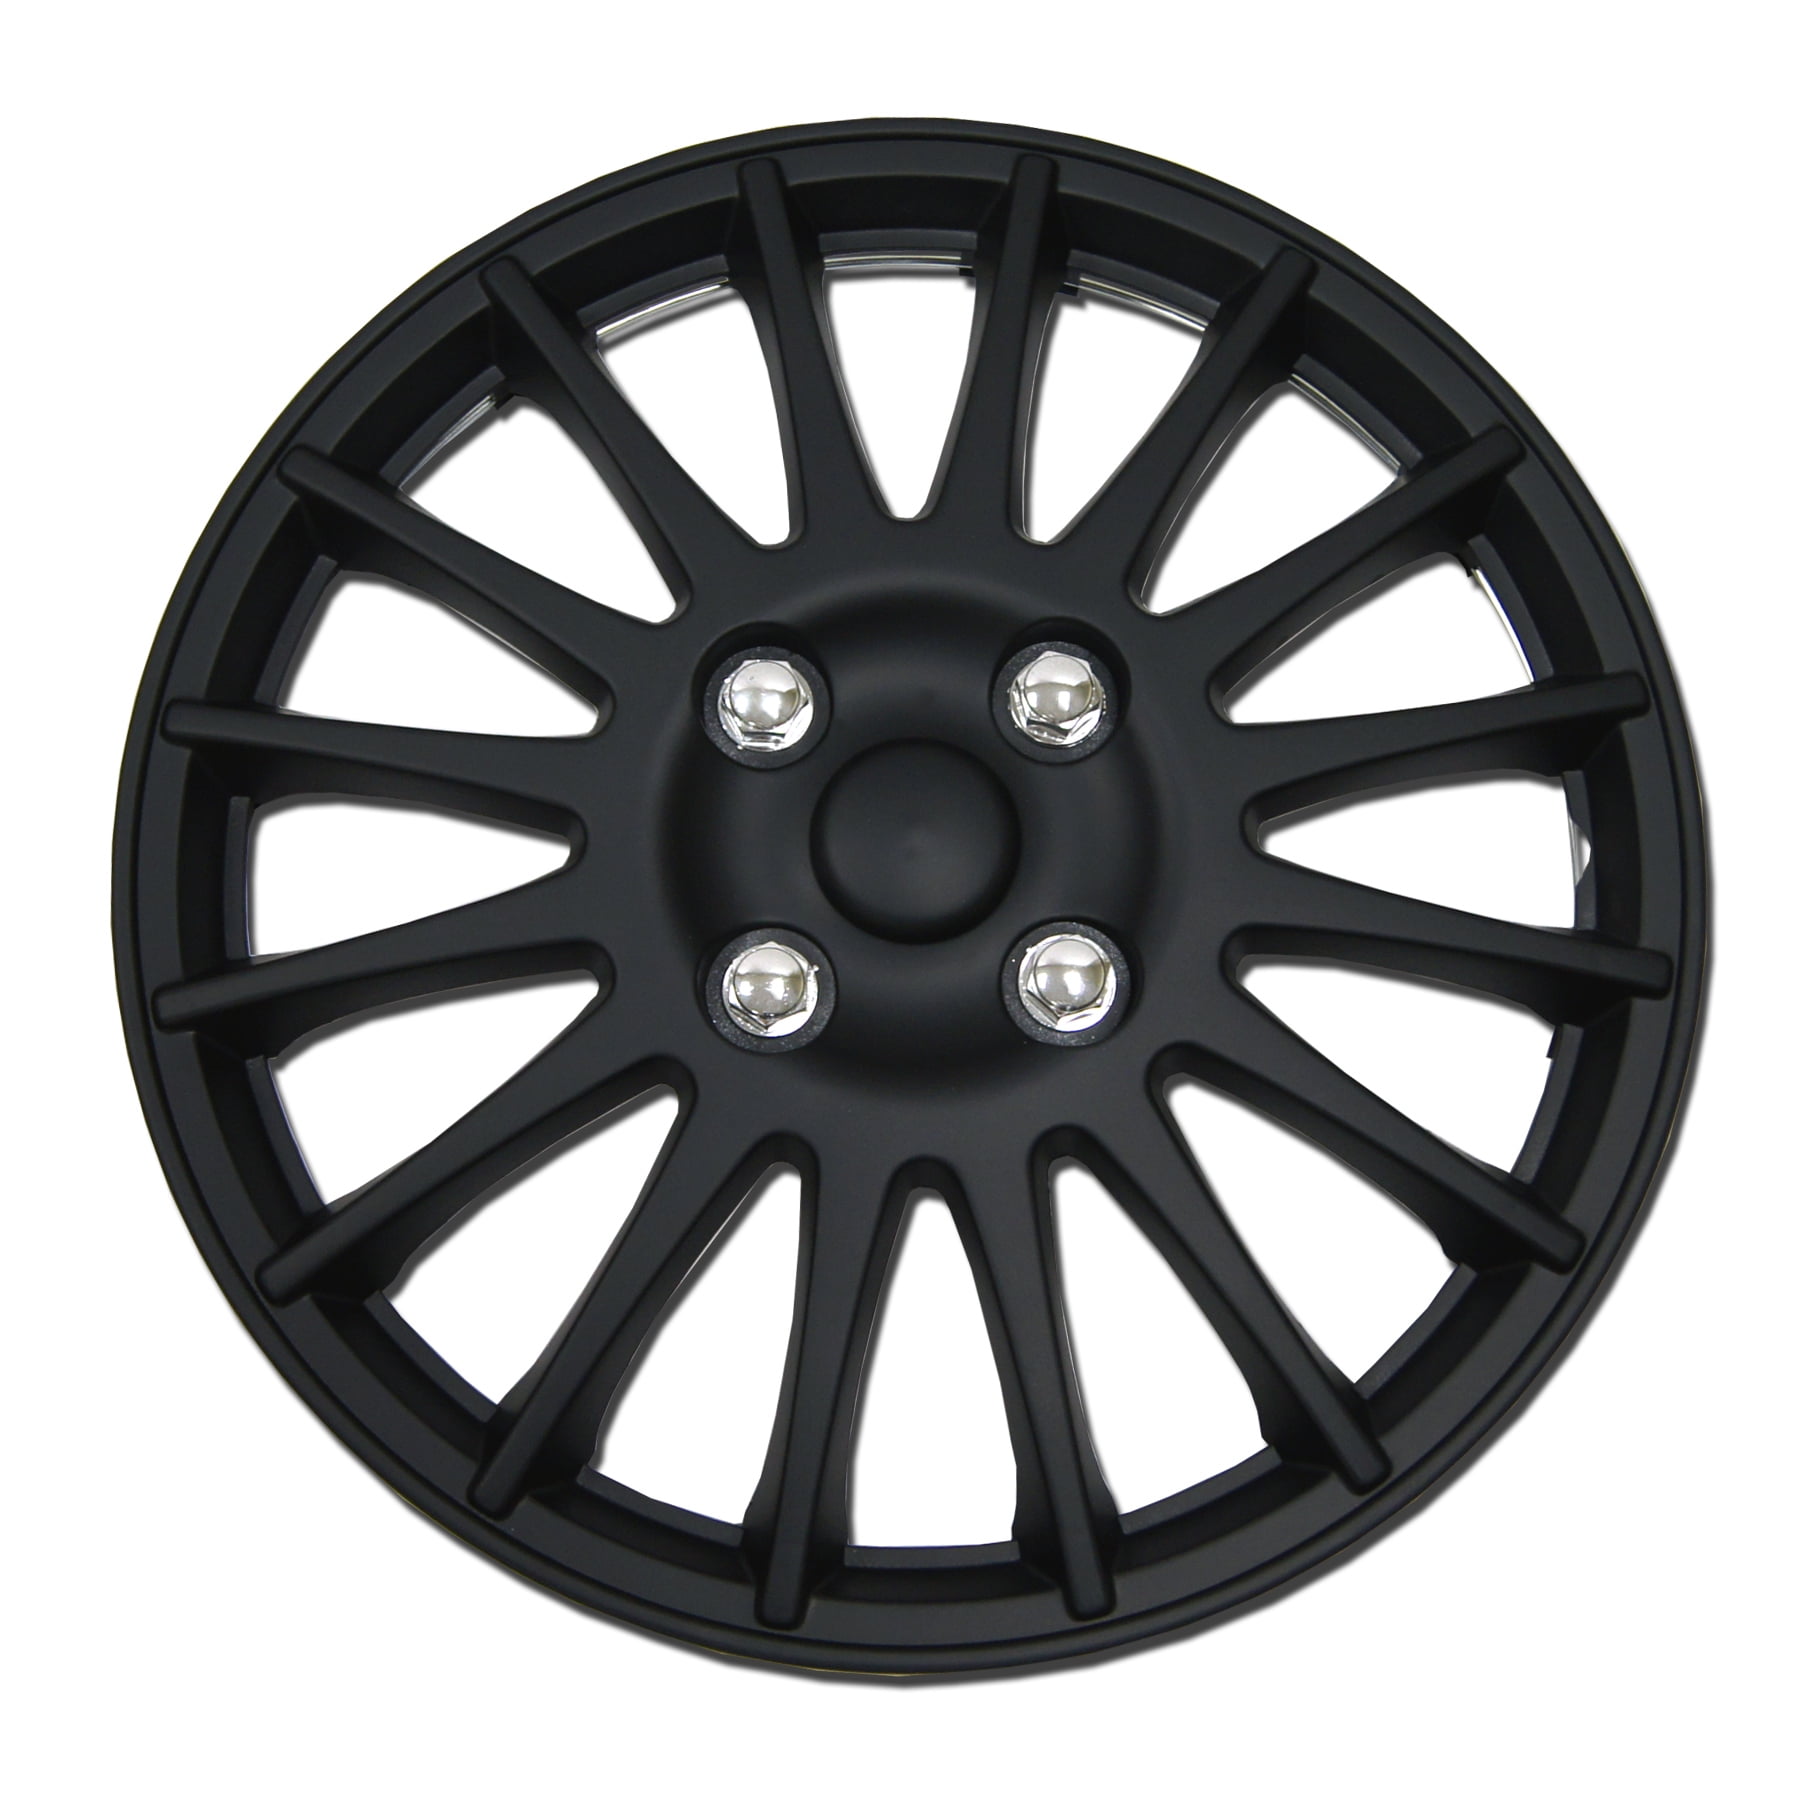 Wheel Trim 15 Inch Gloss Black Set of 4 Univers Hub Caps Covers AKT Black|